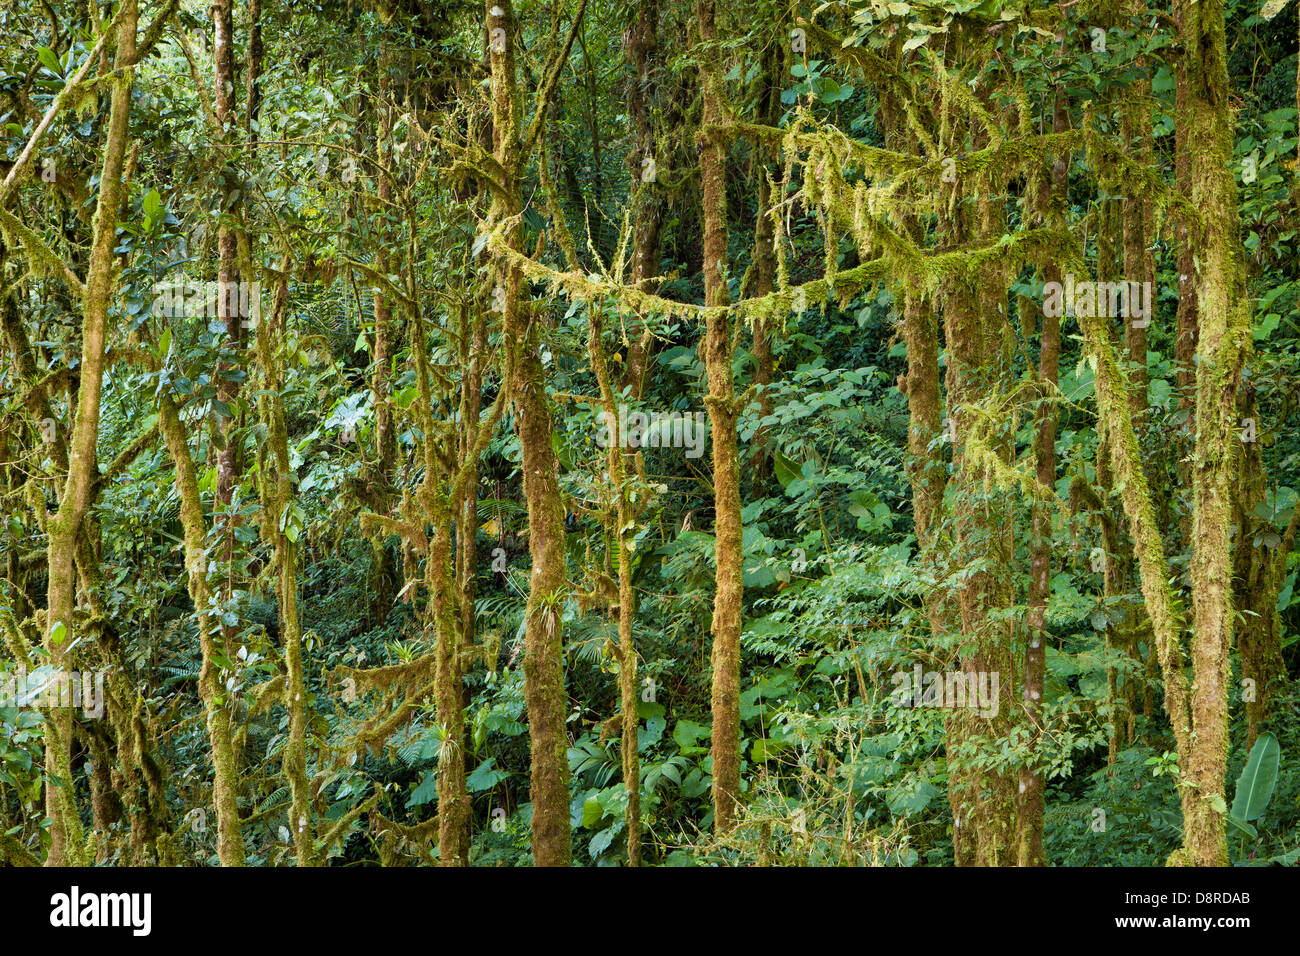 Cloudforest in La Amistad National Park, Chiriqui province, Republic of Panama. Stock Photo